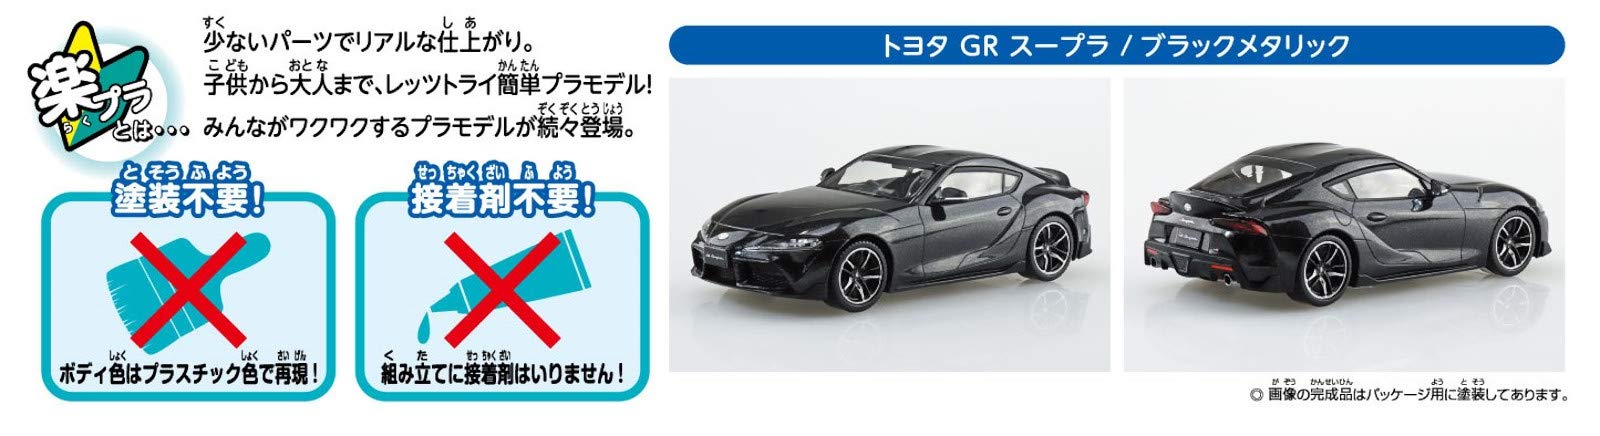 AOSHIMA The Snap Kit 1/32 Toyota Gr Supra Schwarz Metallic Kunststoffmodell